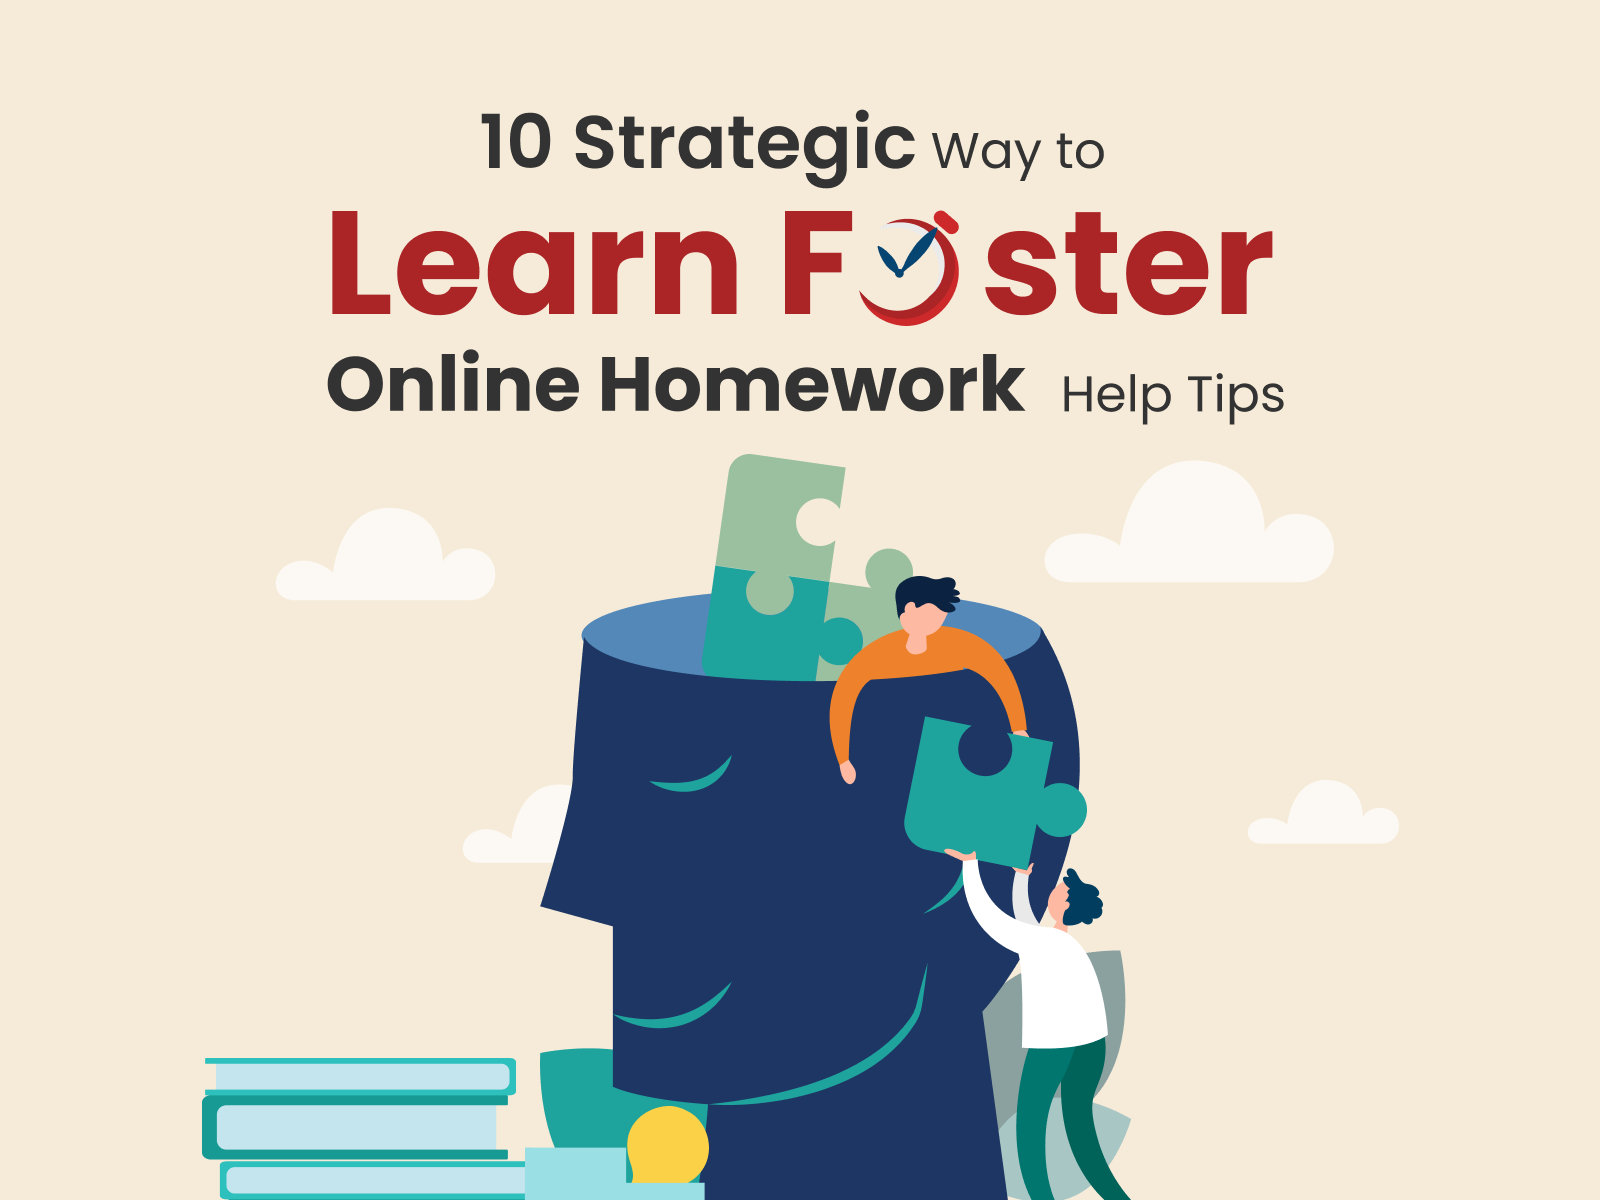 Online Homework Help